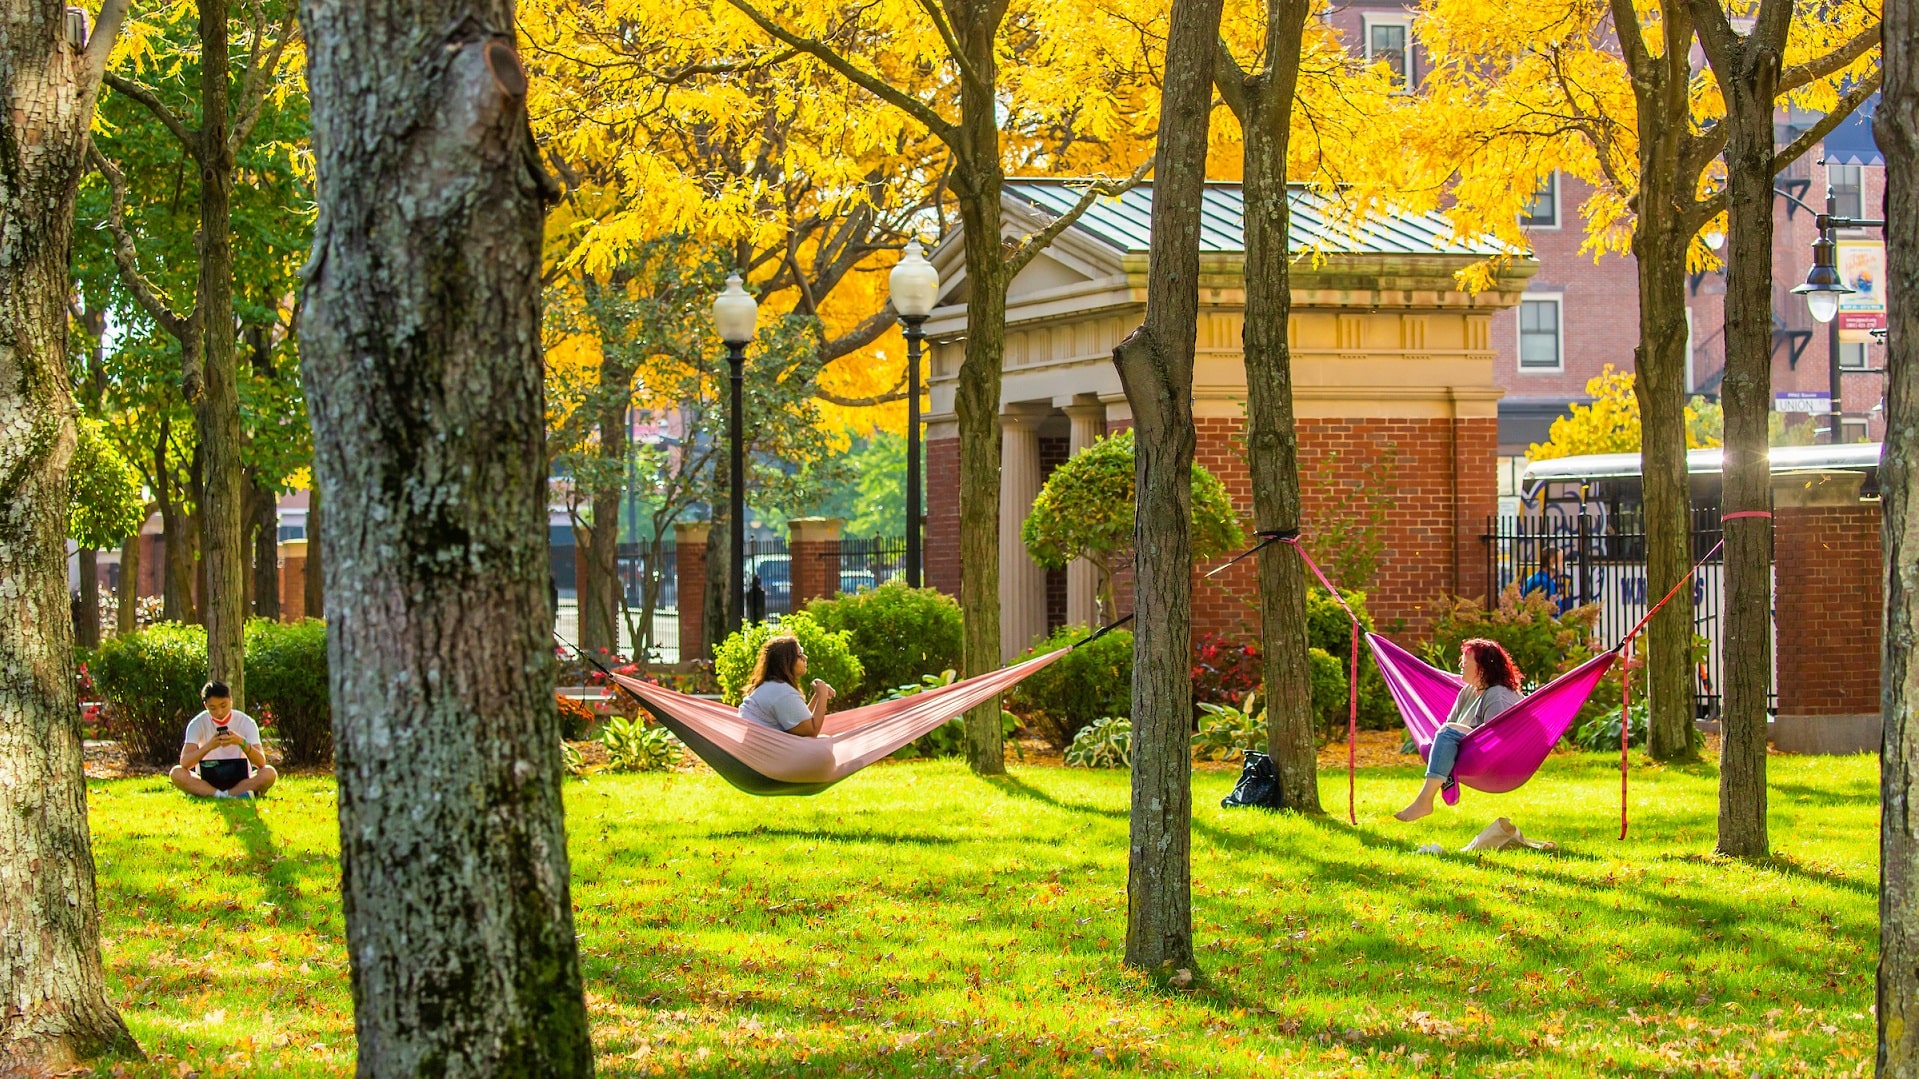 JWU students lounging on hammocks